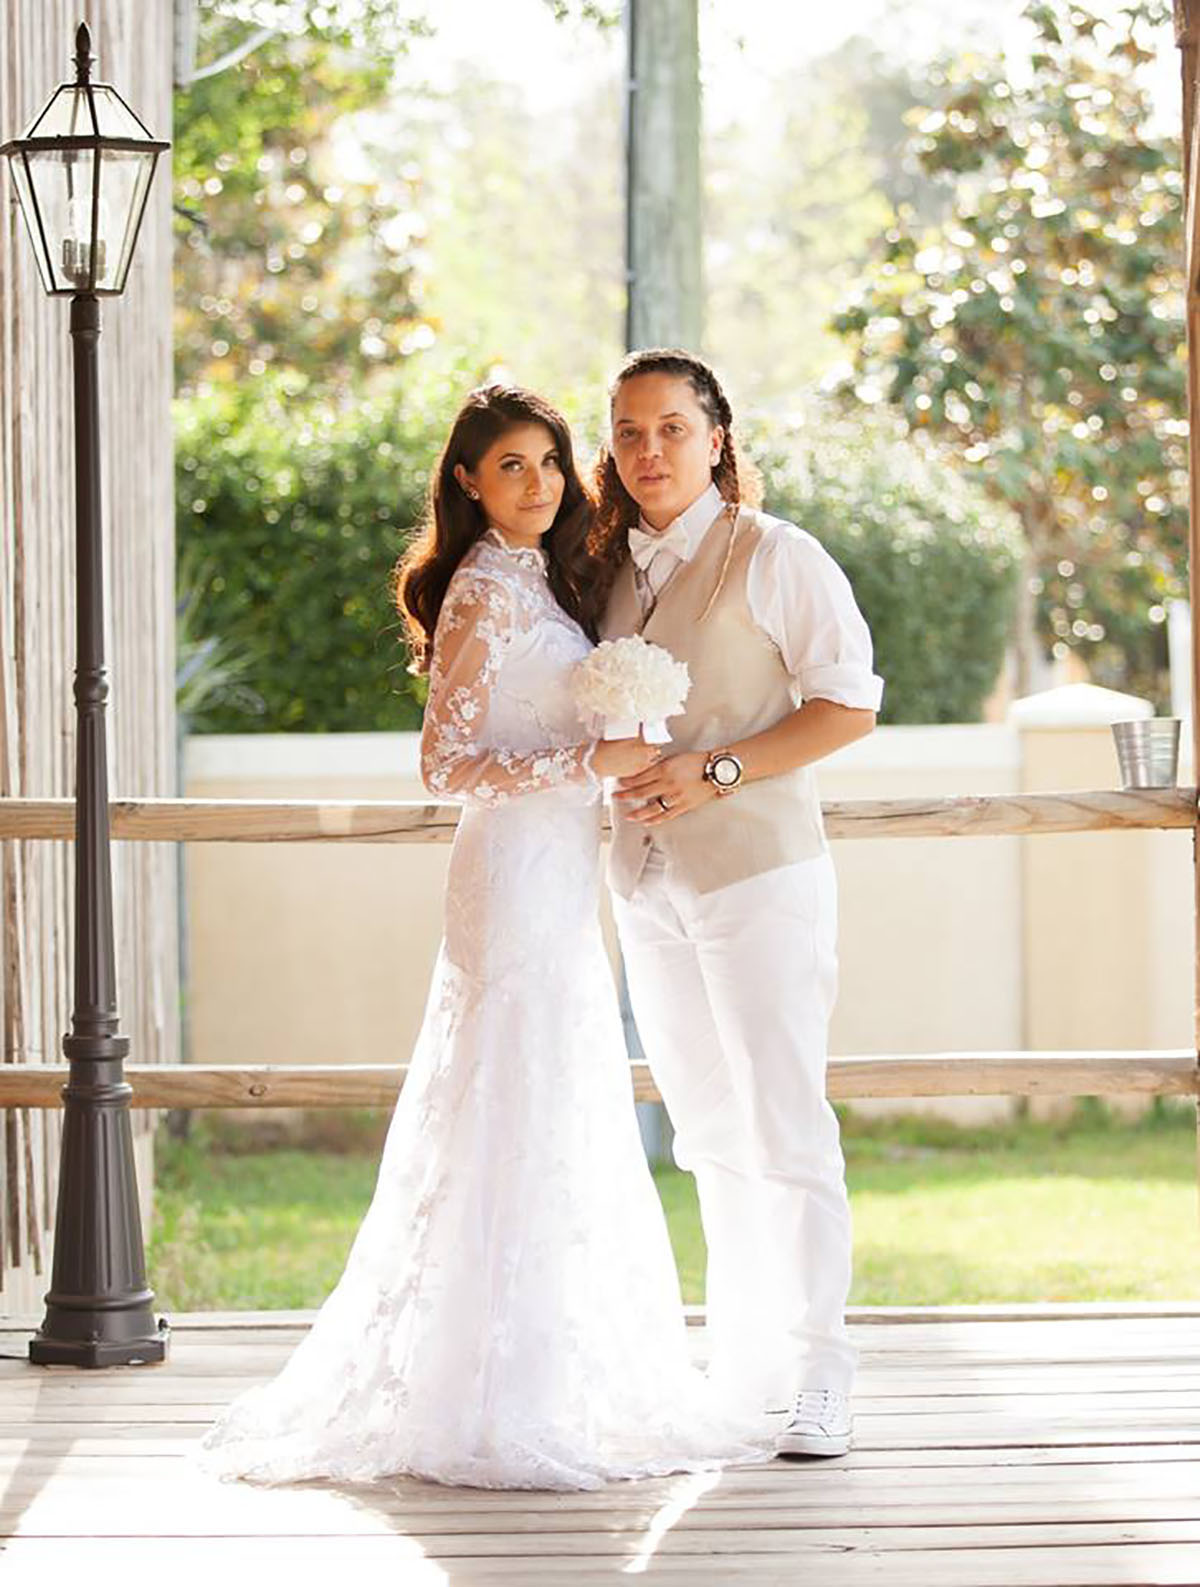 Spiritual geometry-themed wedding two brides long lace white dress simple vest suit